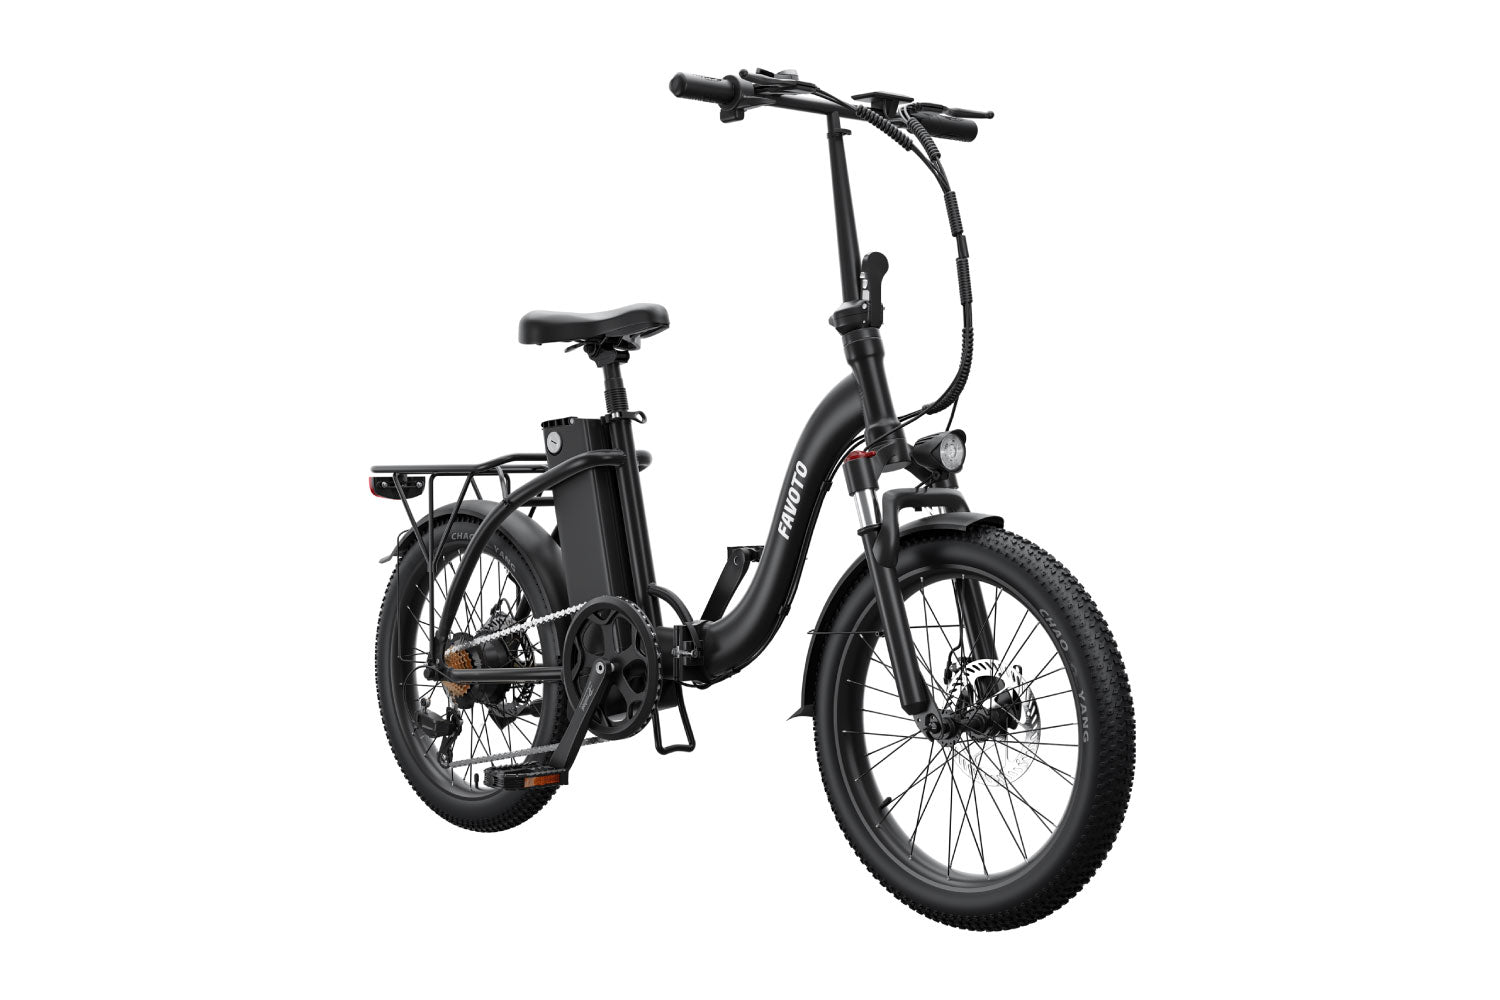 Flit foldable electric bike